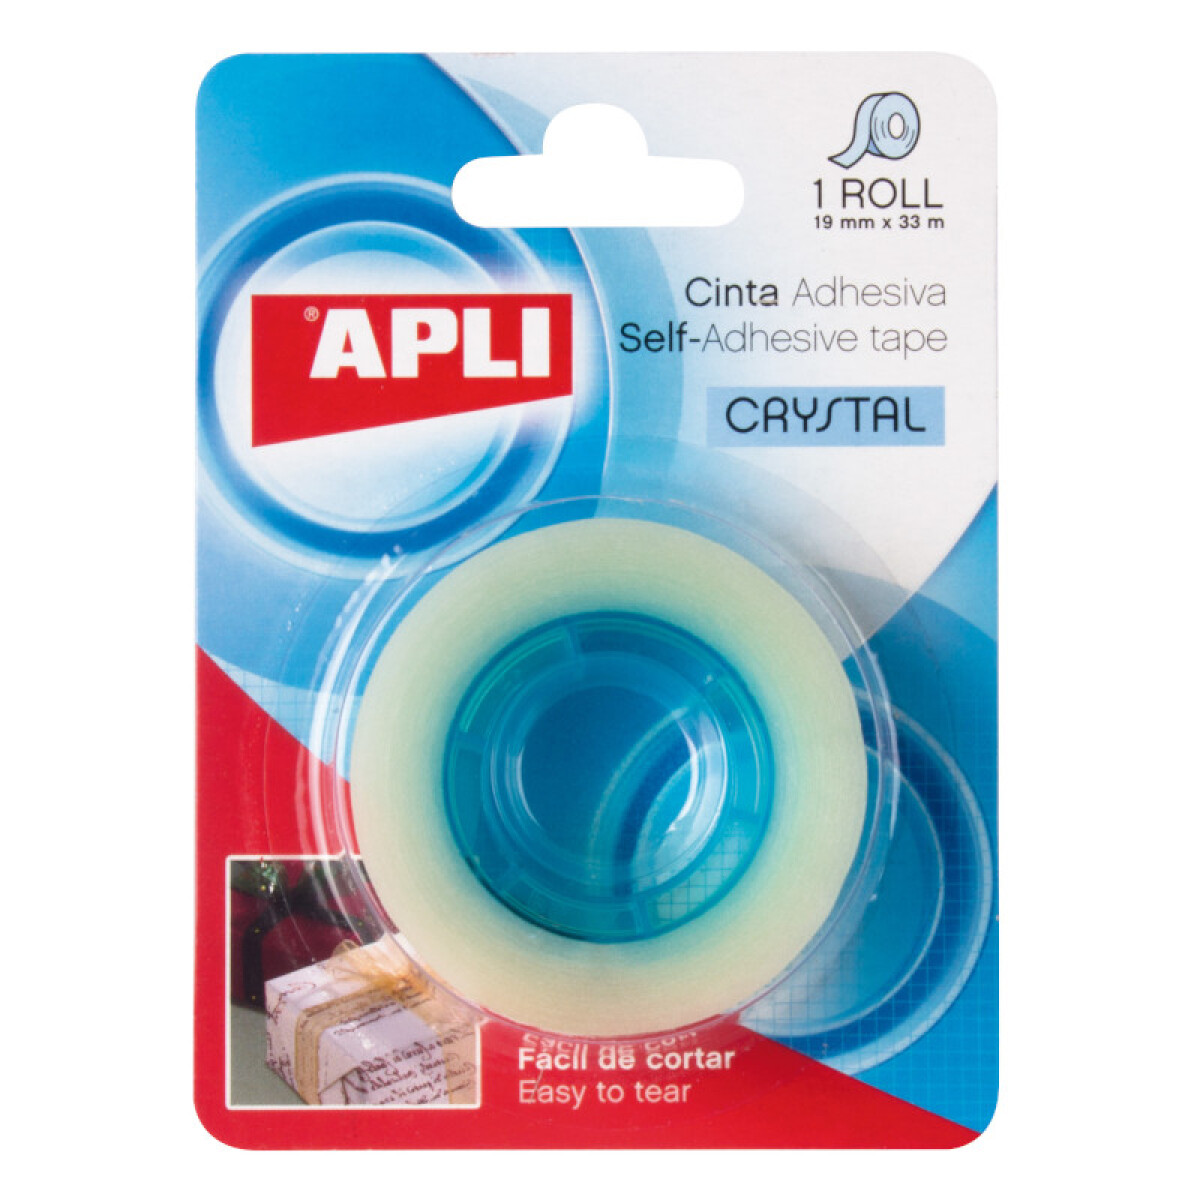 Cinta adhesiva APLI crystal 19x33 